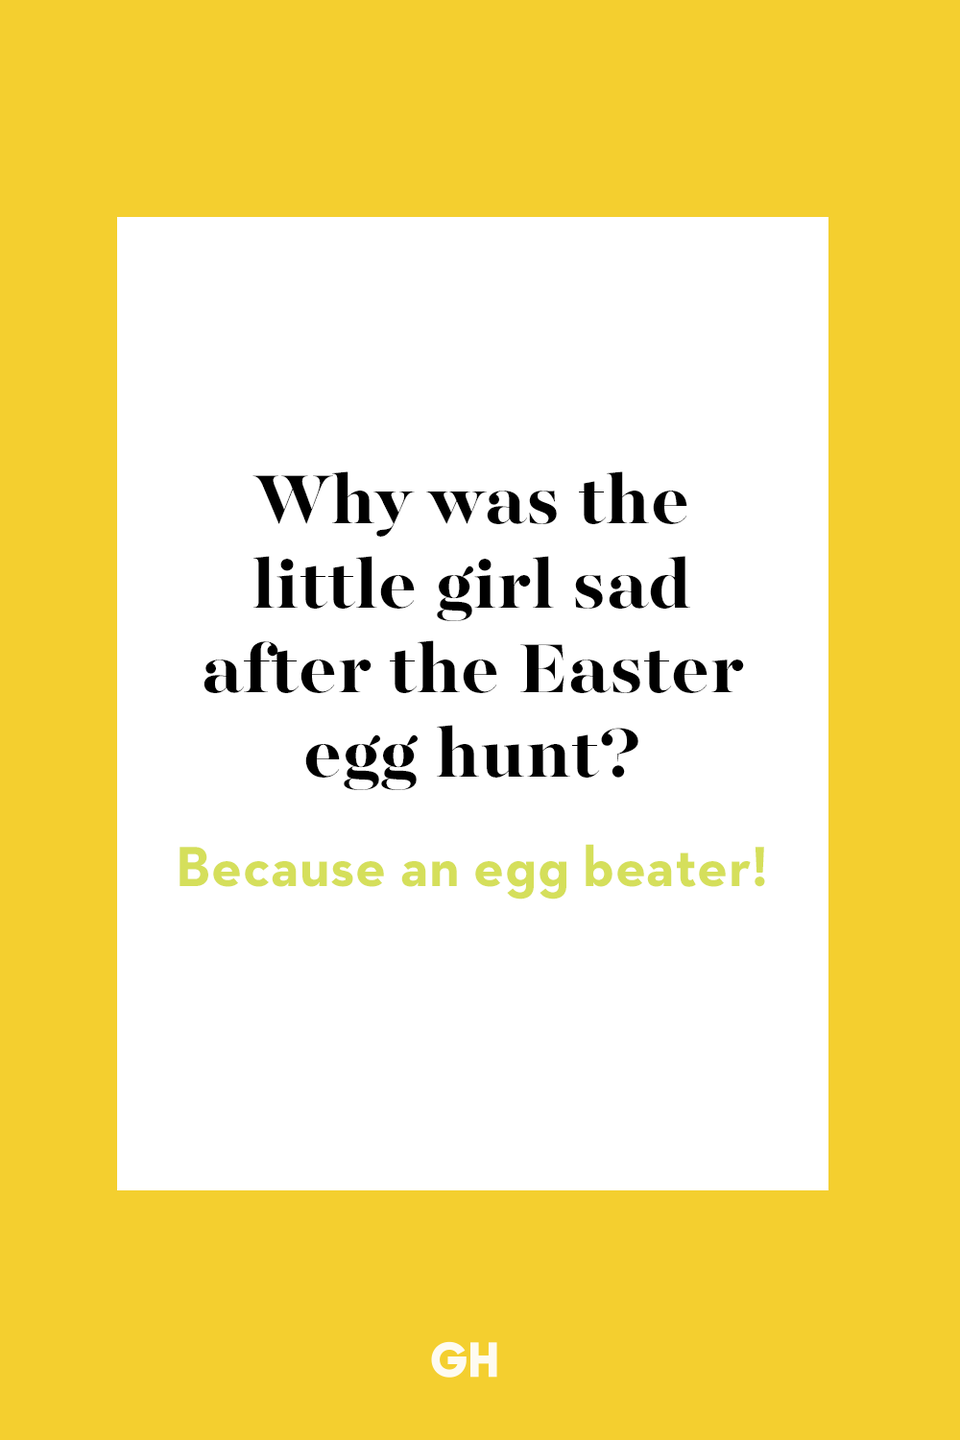 <p>Because an egg beater!</p>